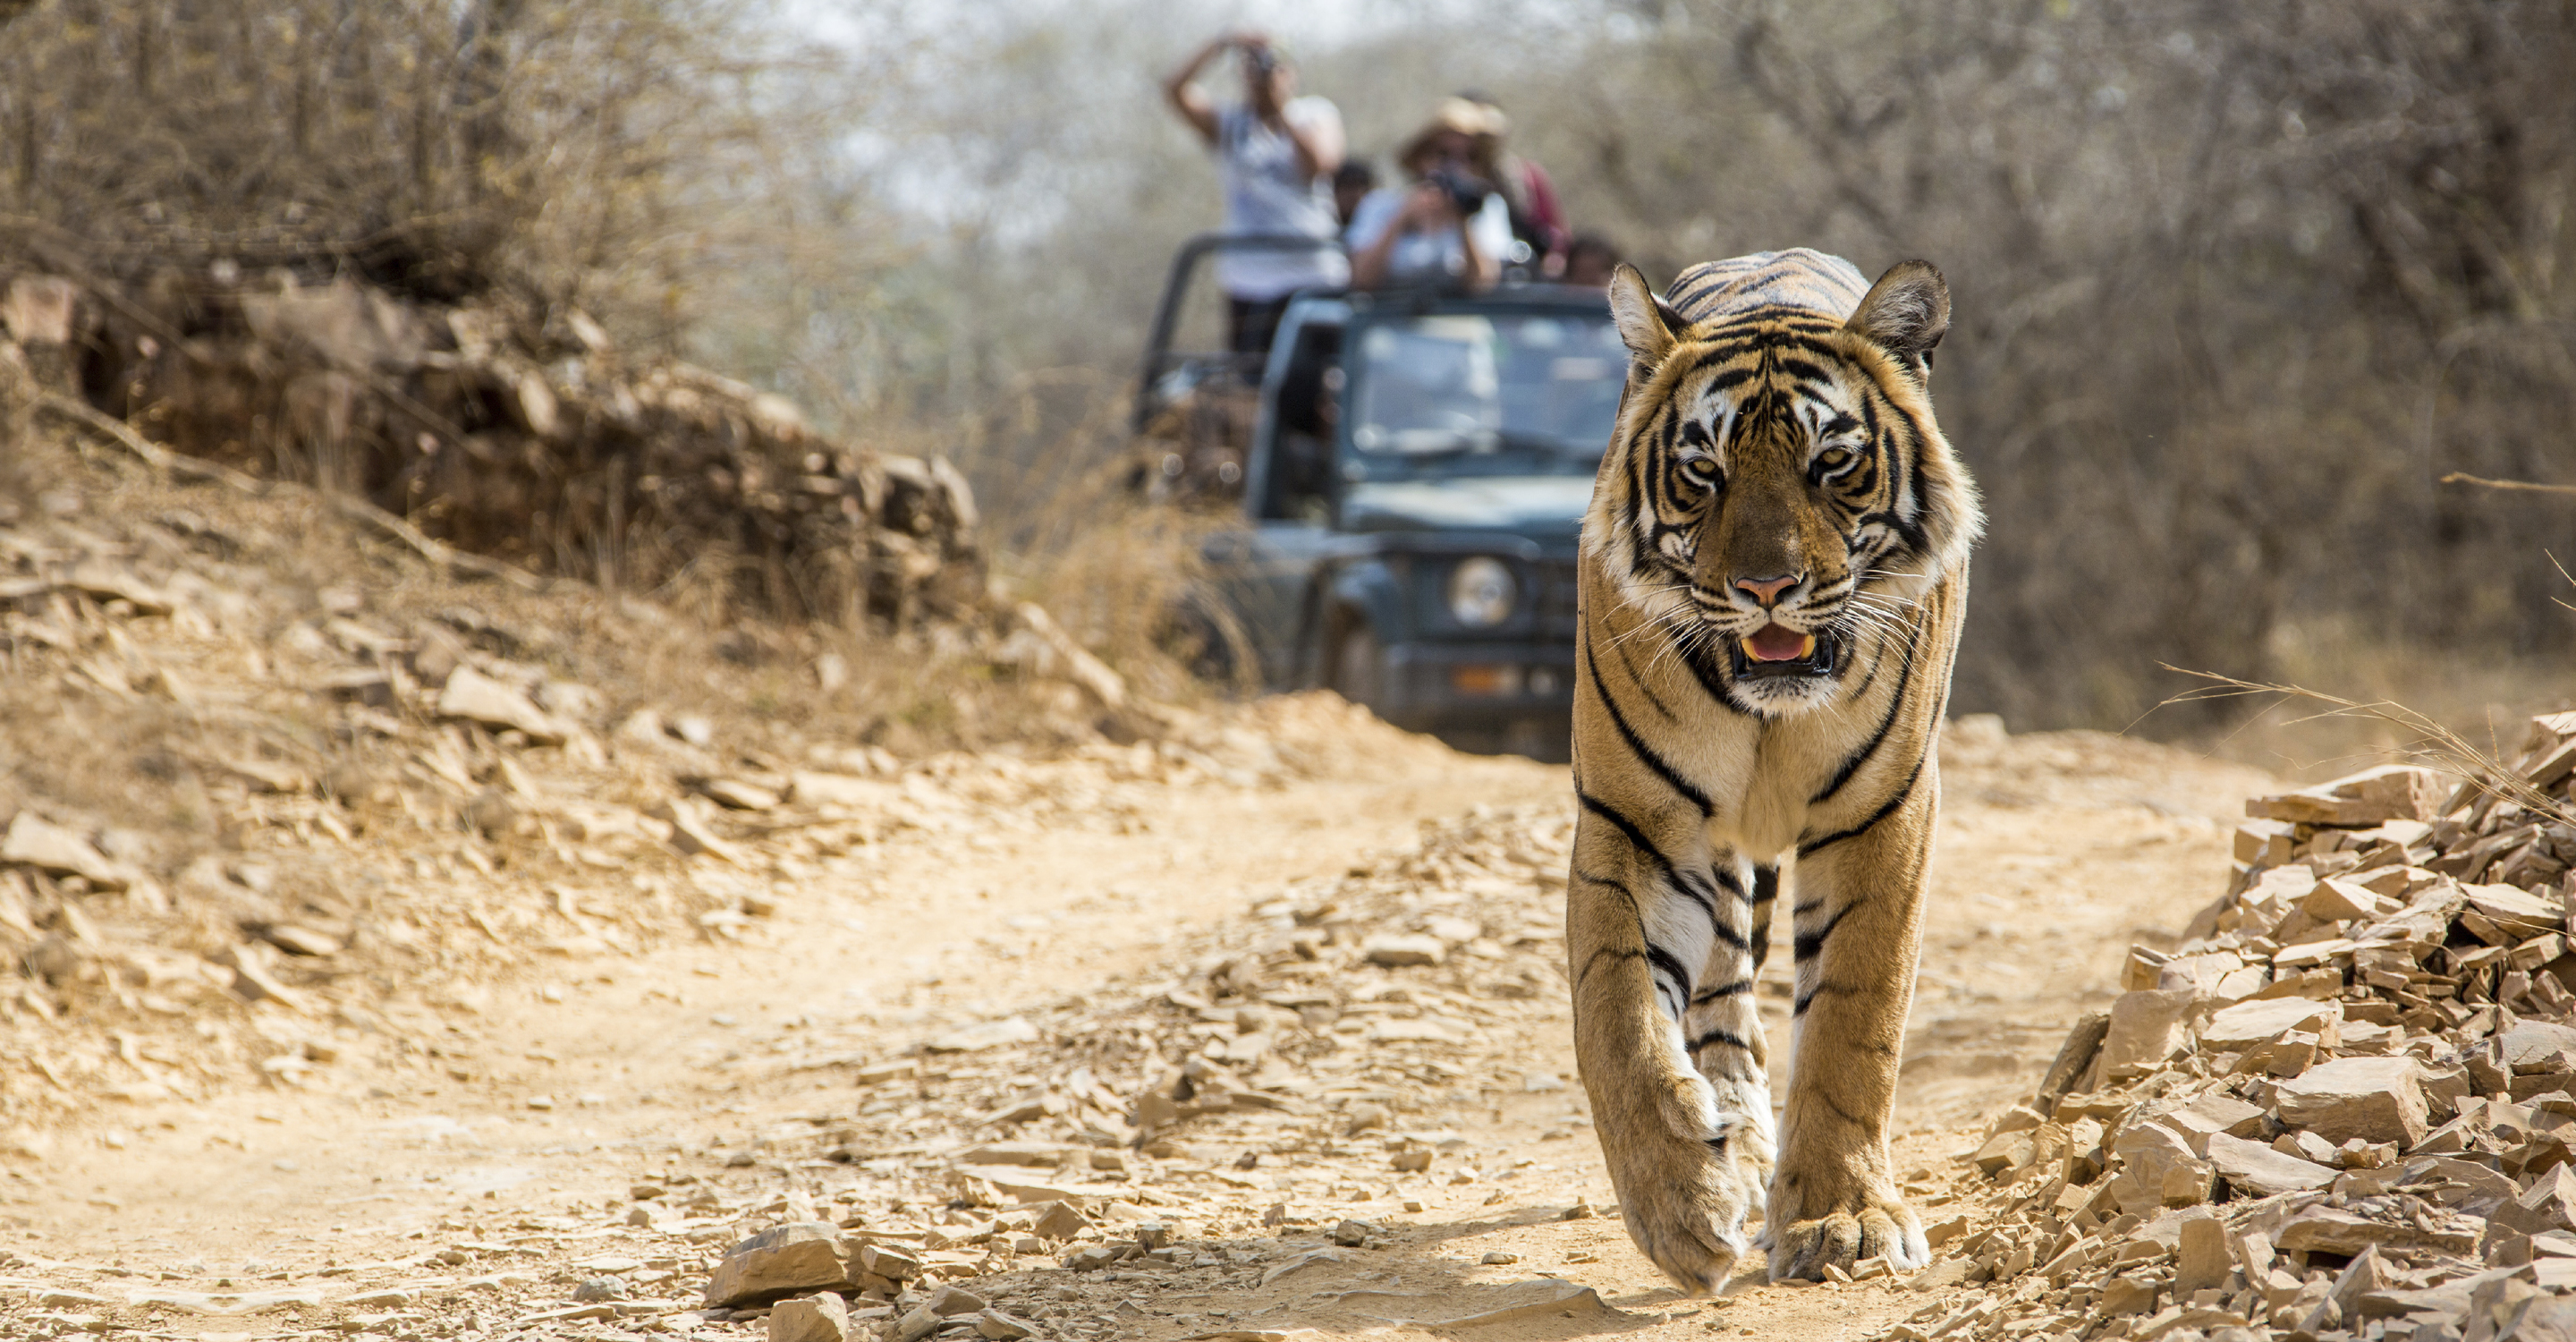 A Bengal tiger walks along the dirt road away from photographers in a safari vehicle in Kaziranga National Park, India